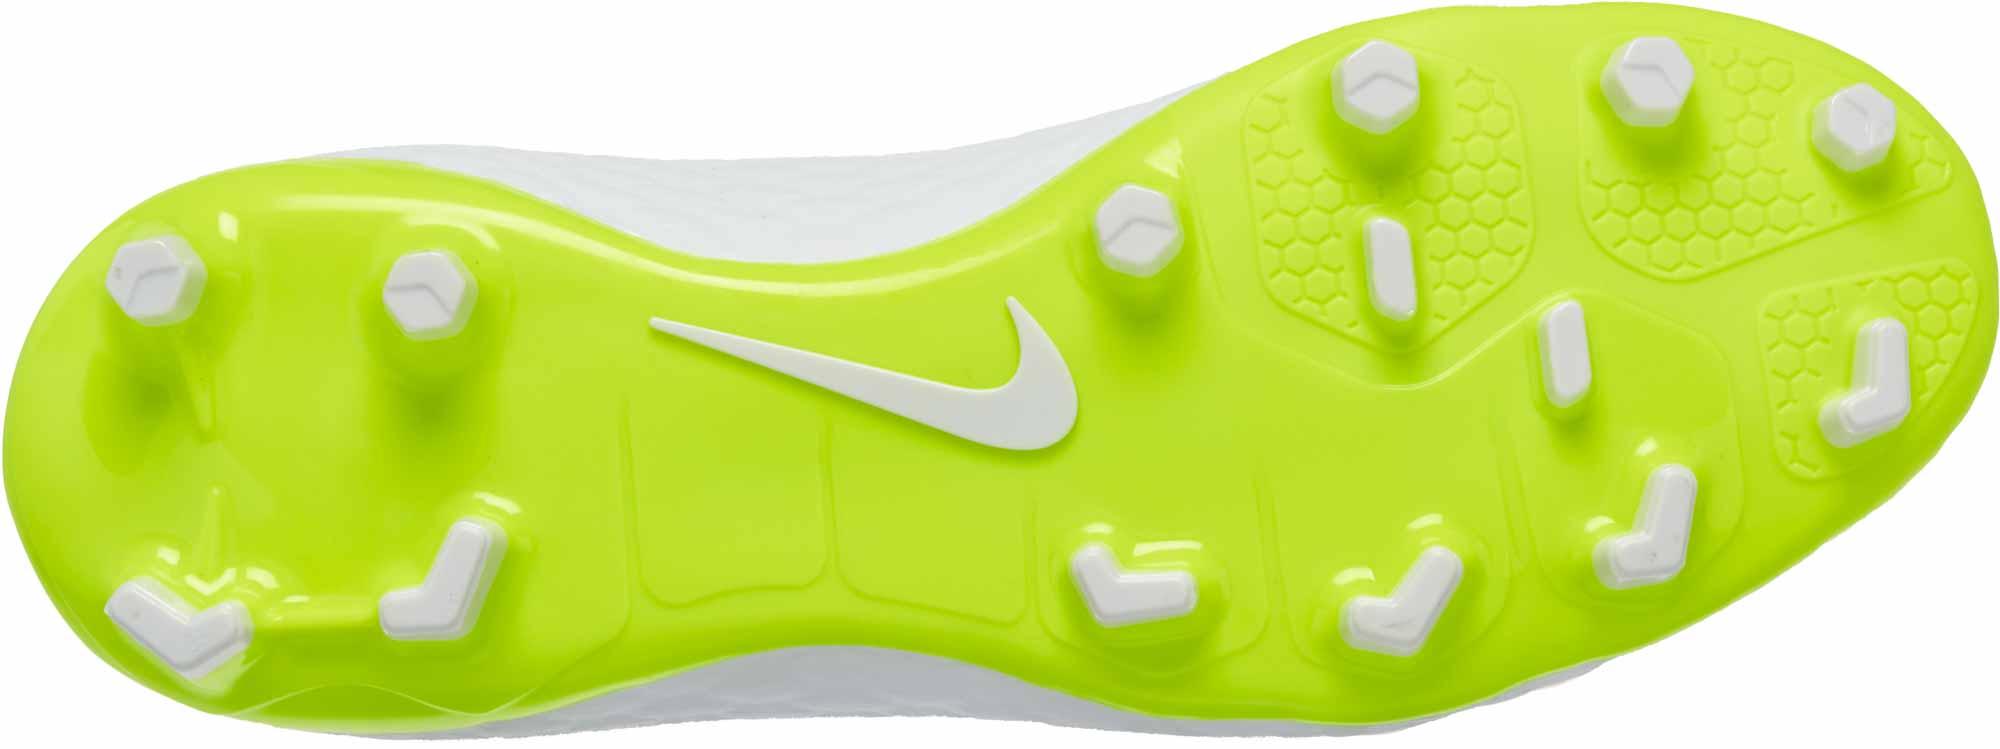 Nike Hypervenom Phantom III Academy DF FG Youth - White/Metallic Cool Grey/Volt - SoccerPro